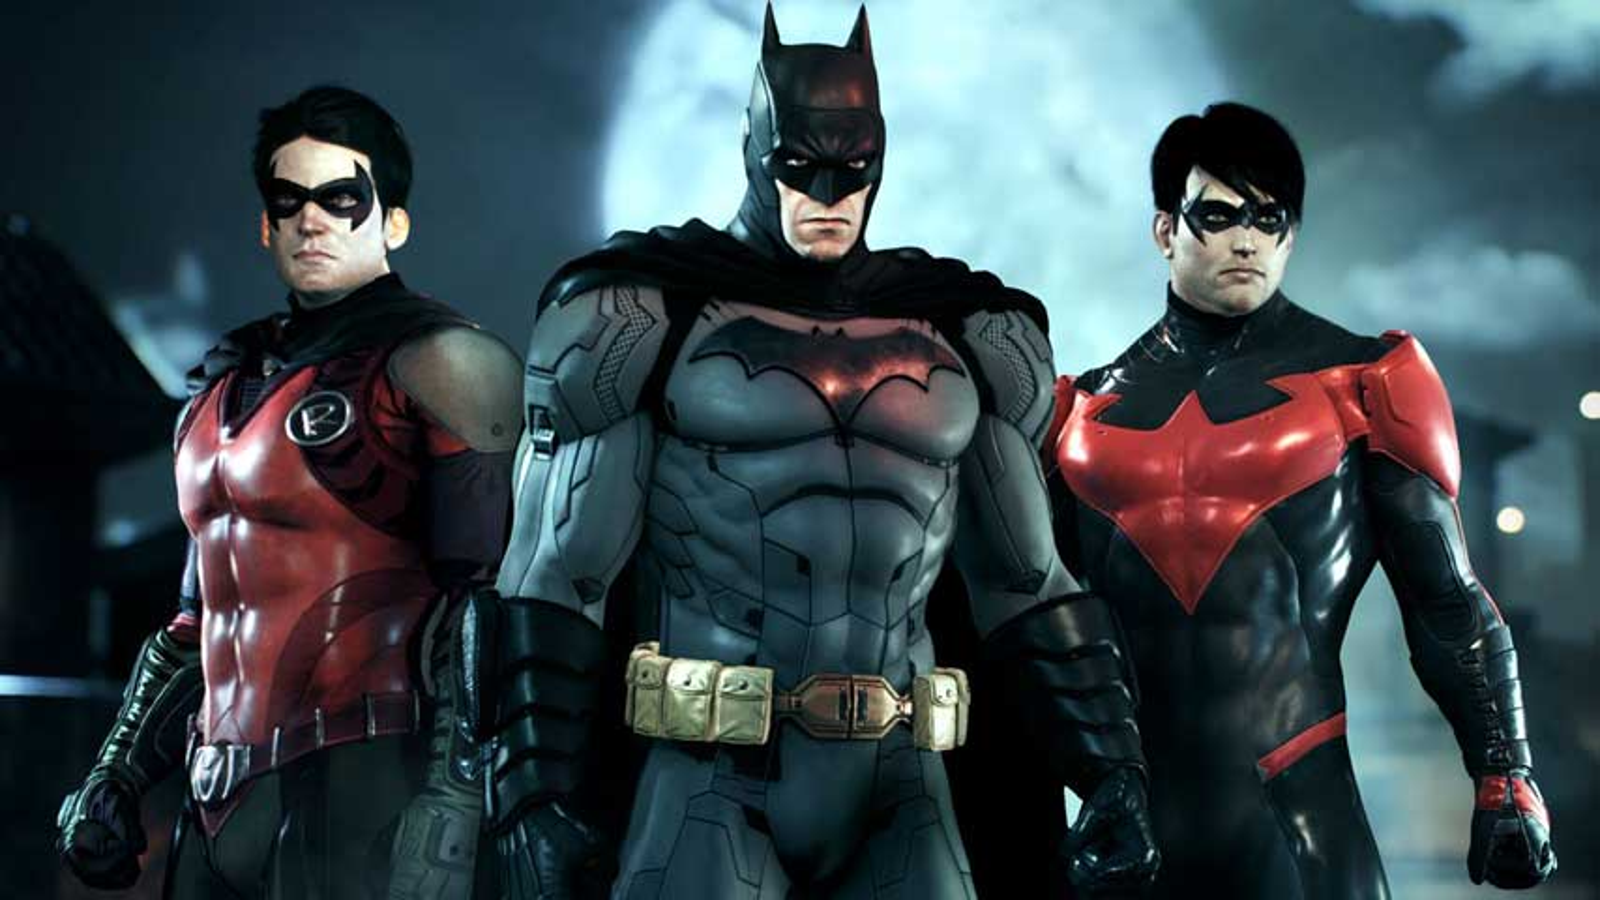 Game of the Week - Batman Arkham City